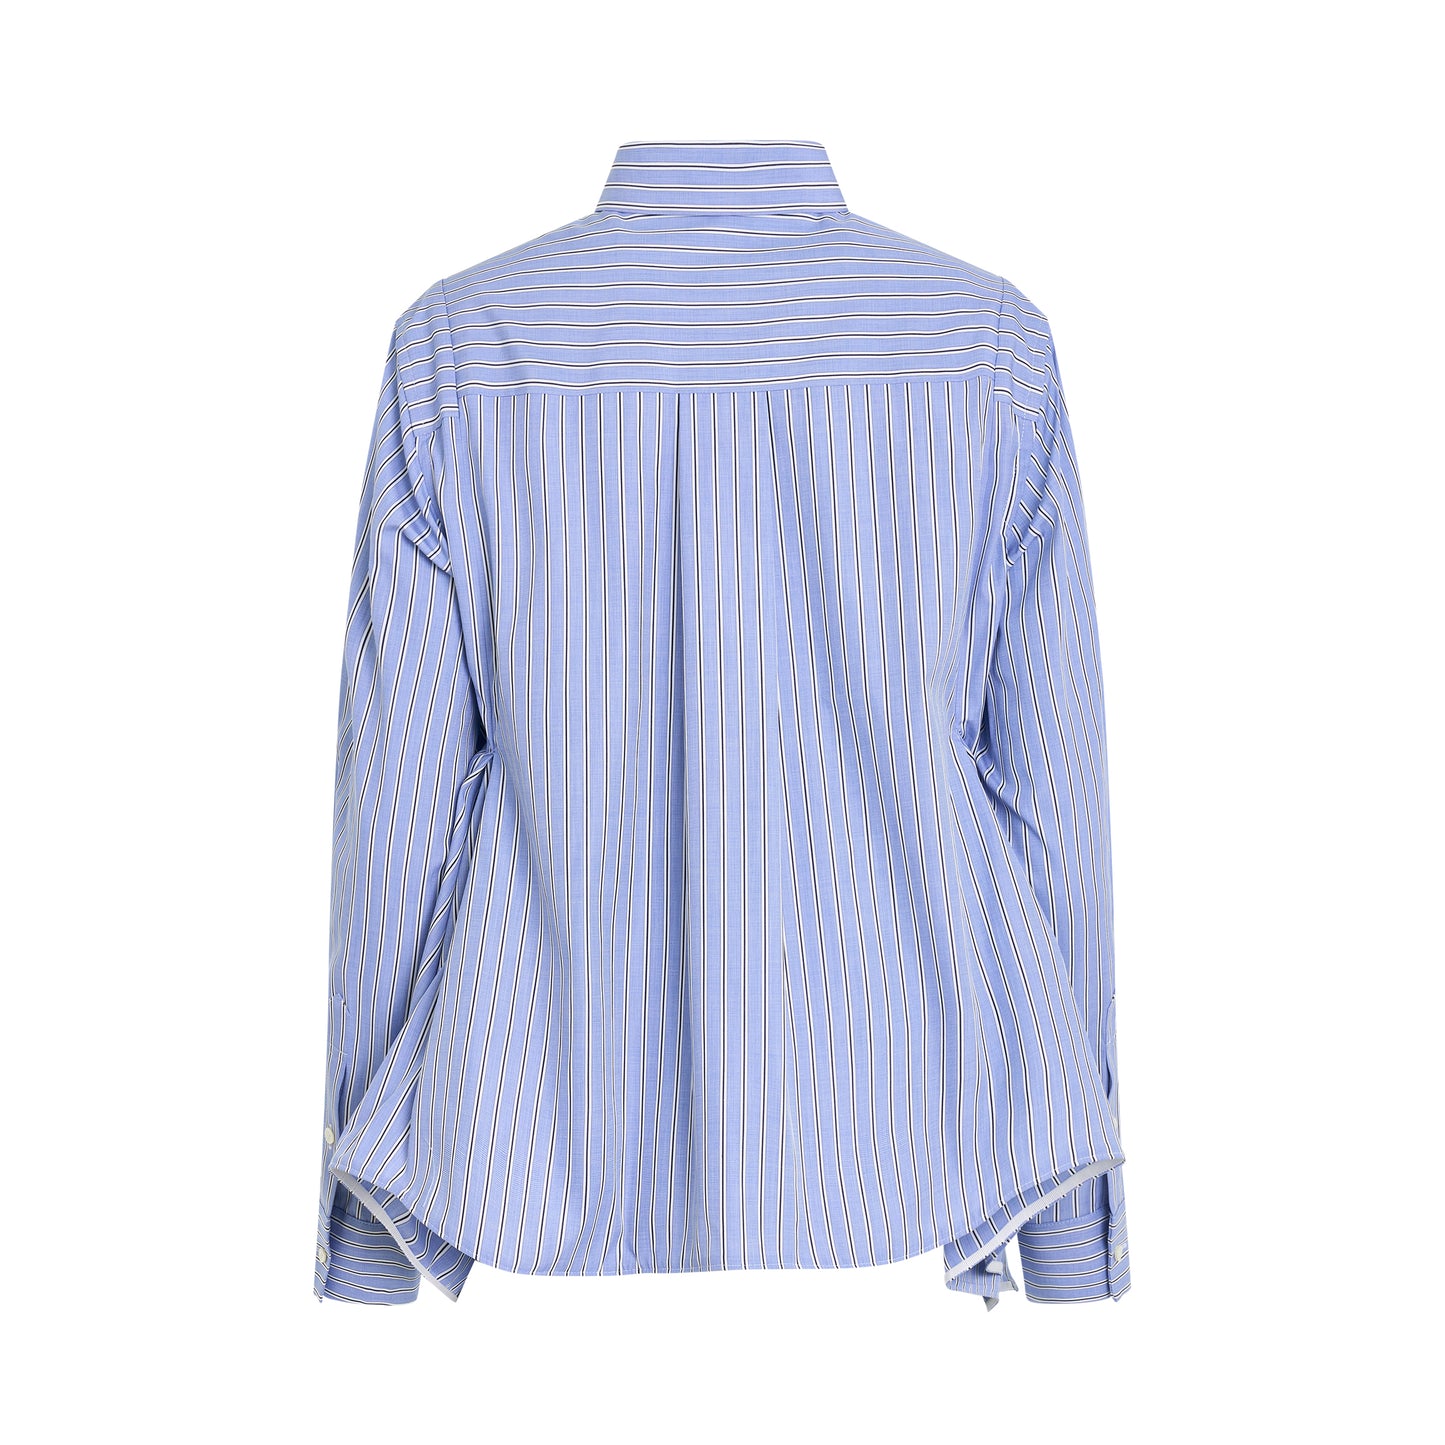 Rushed Thomas Mason Cotton Poplin Shirt in Light Blue Stripe